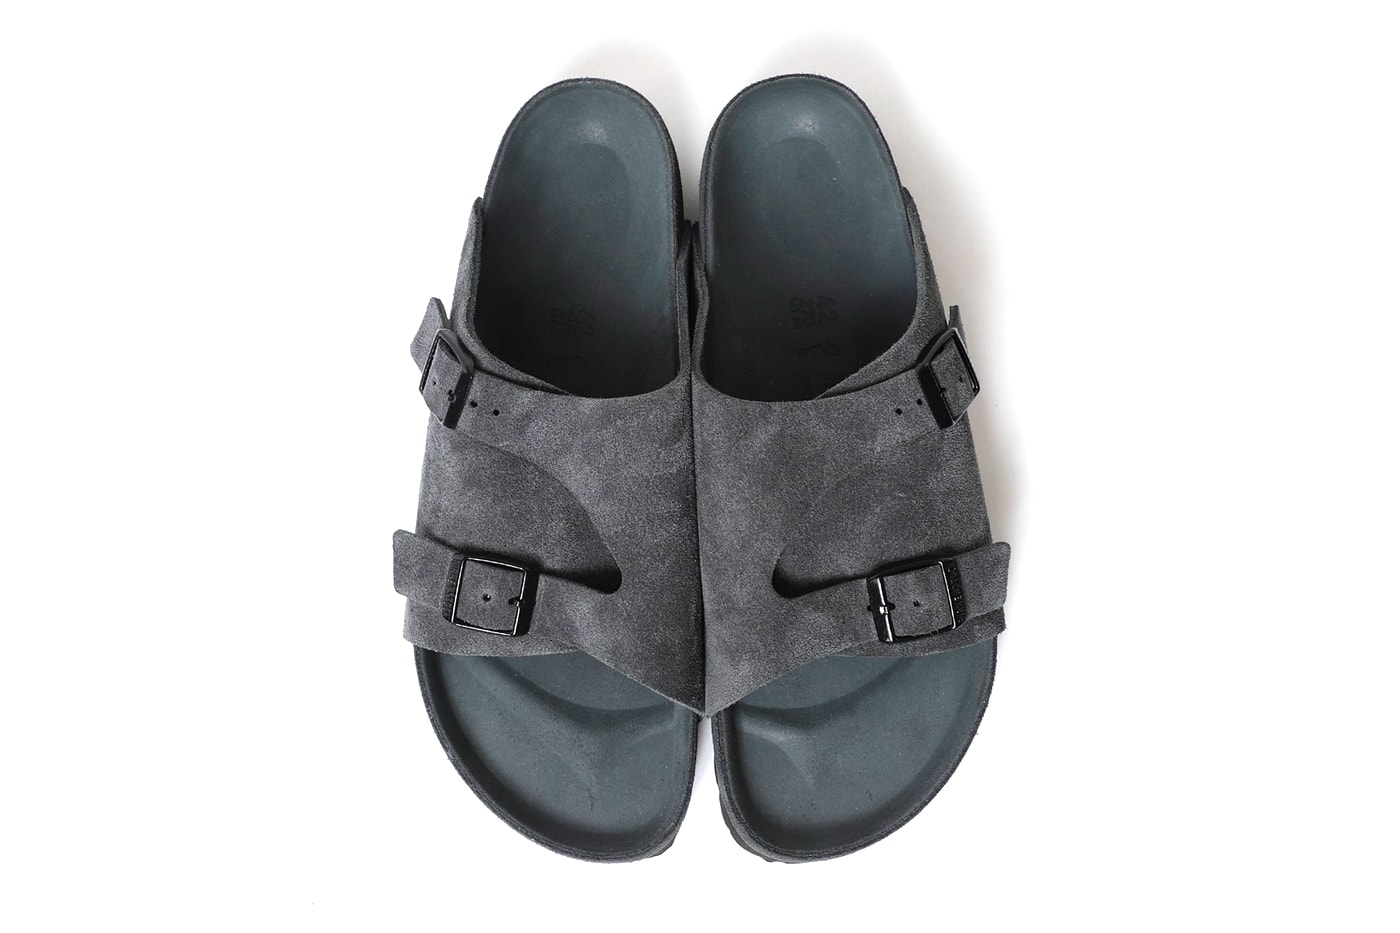 BEAMS Birkenstock Zurich Taupe gray menswear streetwear spring summer 2020 collection collaboration capsule footwear sandals suede nubuck slides slippers shoe japanese